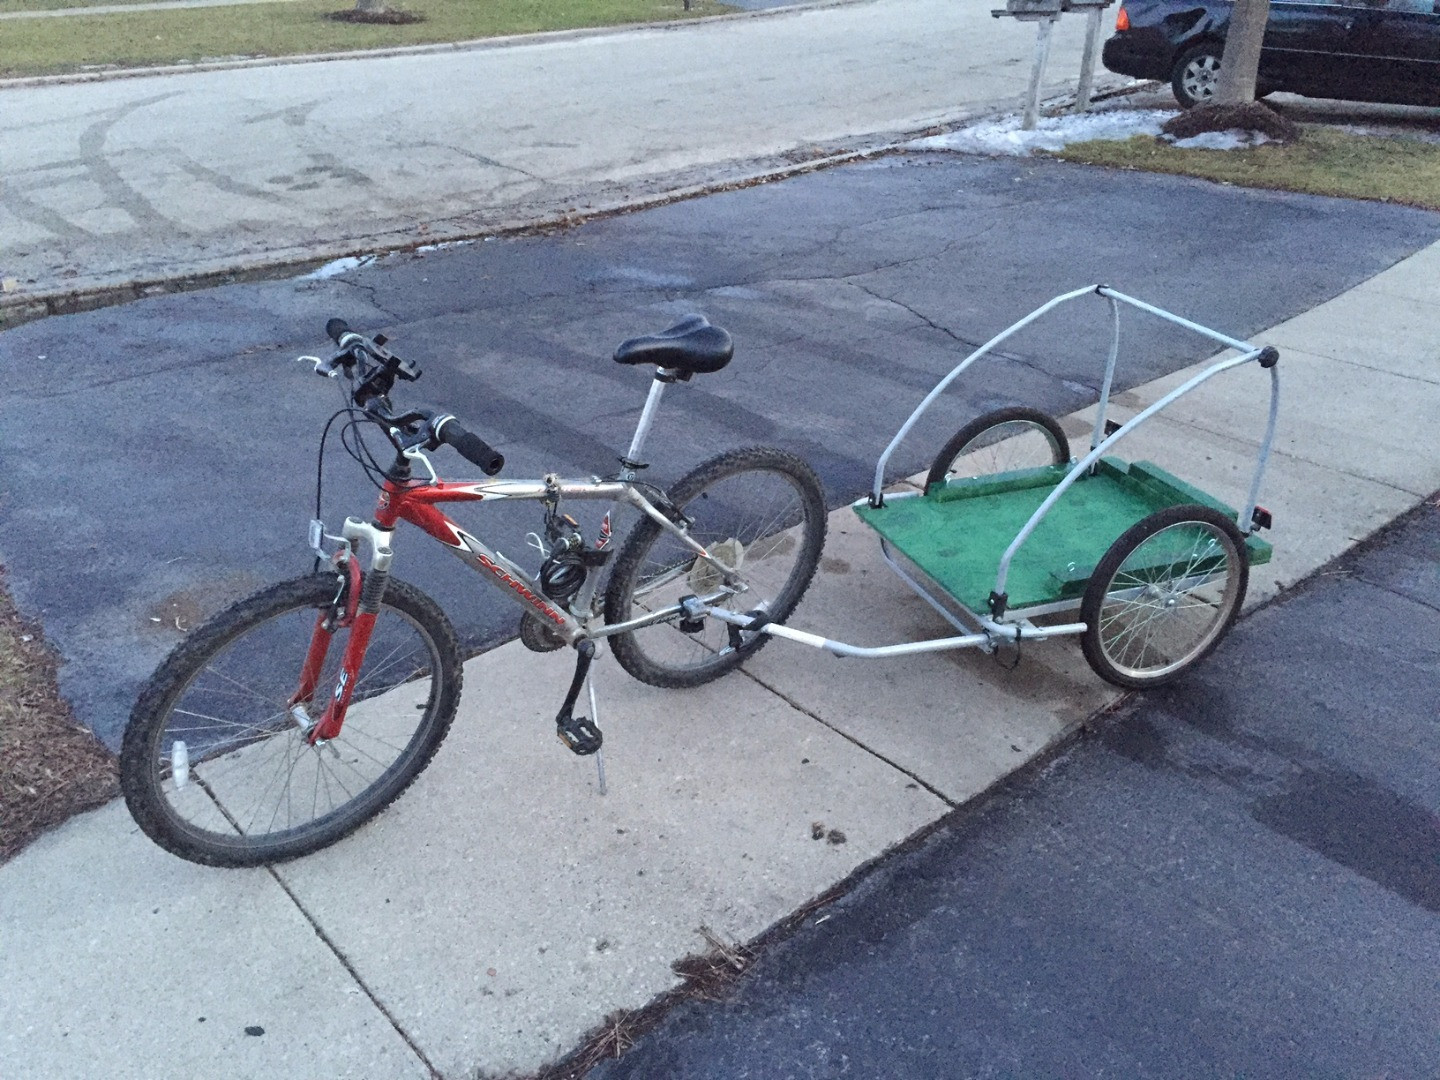 Best ideas about DIY Bike Trailer
. Save or Pin Bike cargo trailer DIY Now.